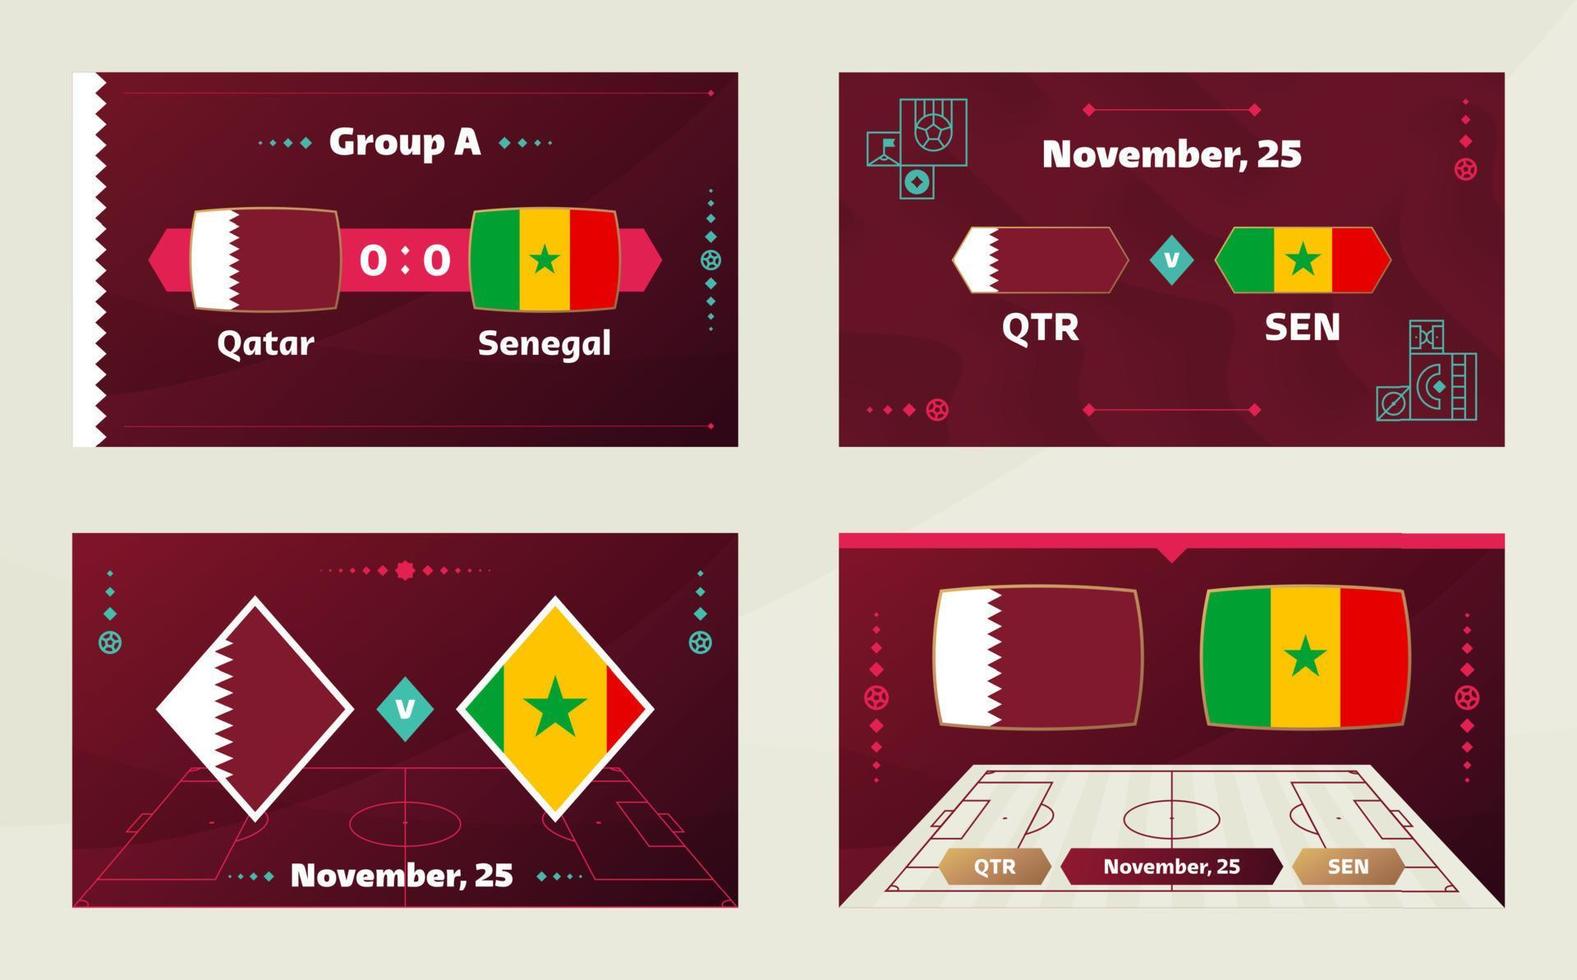 Qatar vs Senegal, Football 2022, Group A. World Football Competition championship match versus teams intro sport background, championship competition final poster, vector illustration.